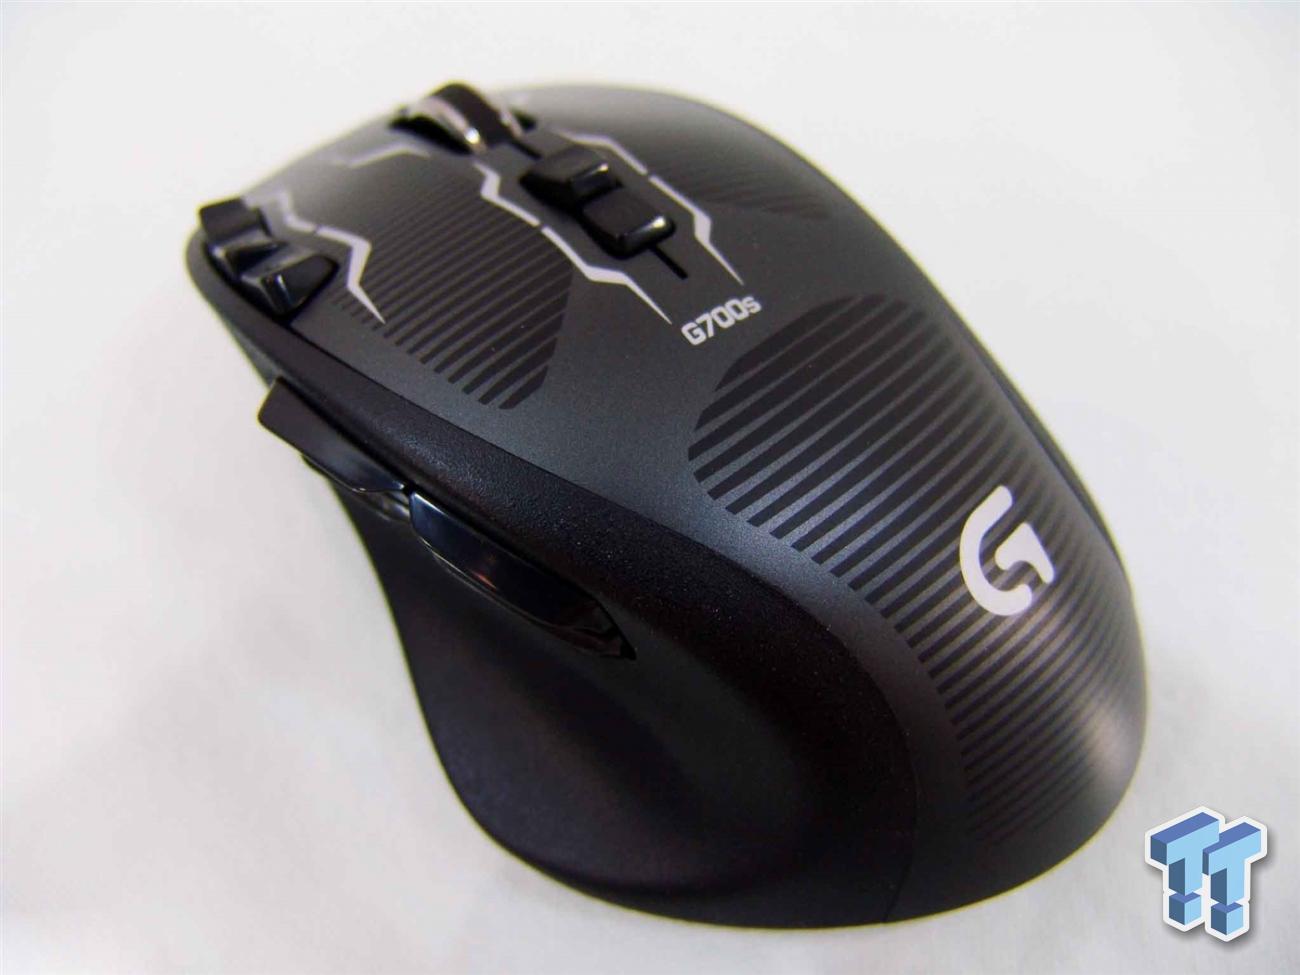 Farmakologi tøj Ulempe Logitech G700s Rechargeable Gaming Mouse Review